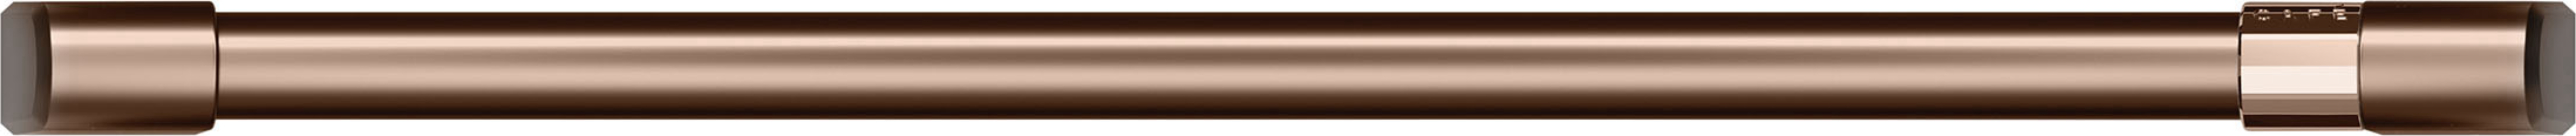 CafeWall Oven/Advantium&reg; oven pro handle kit - 27" - Brushed Copper